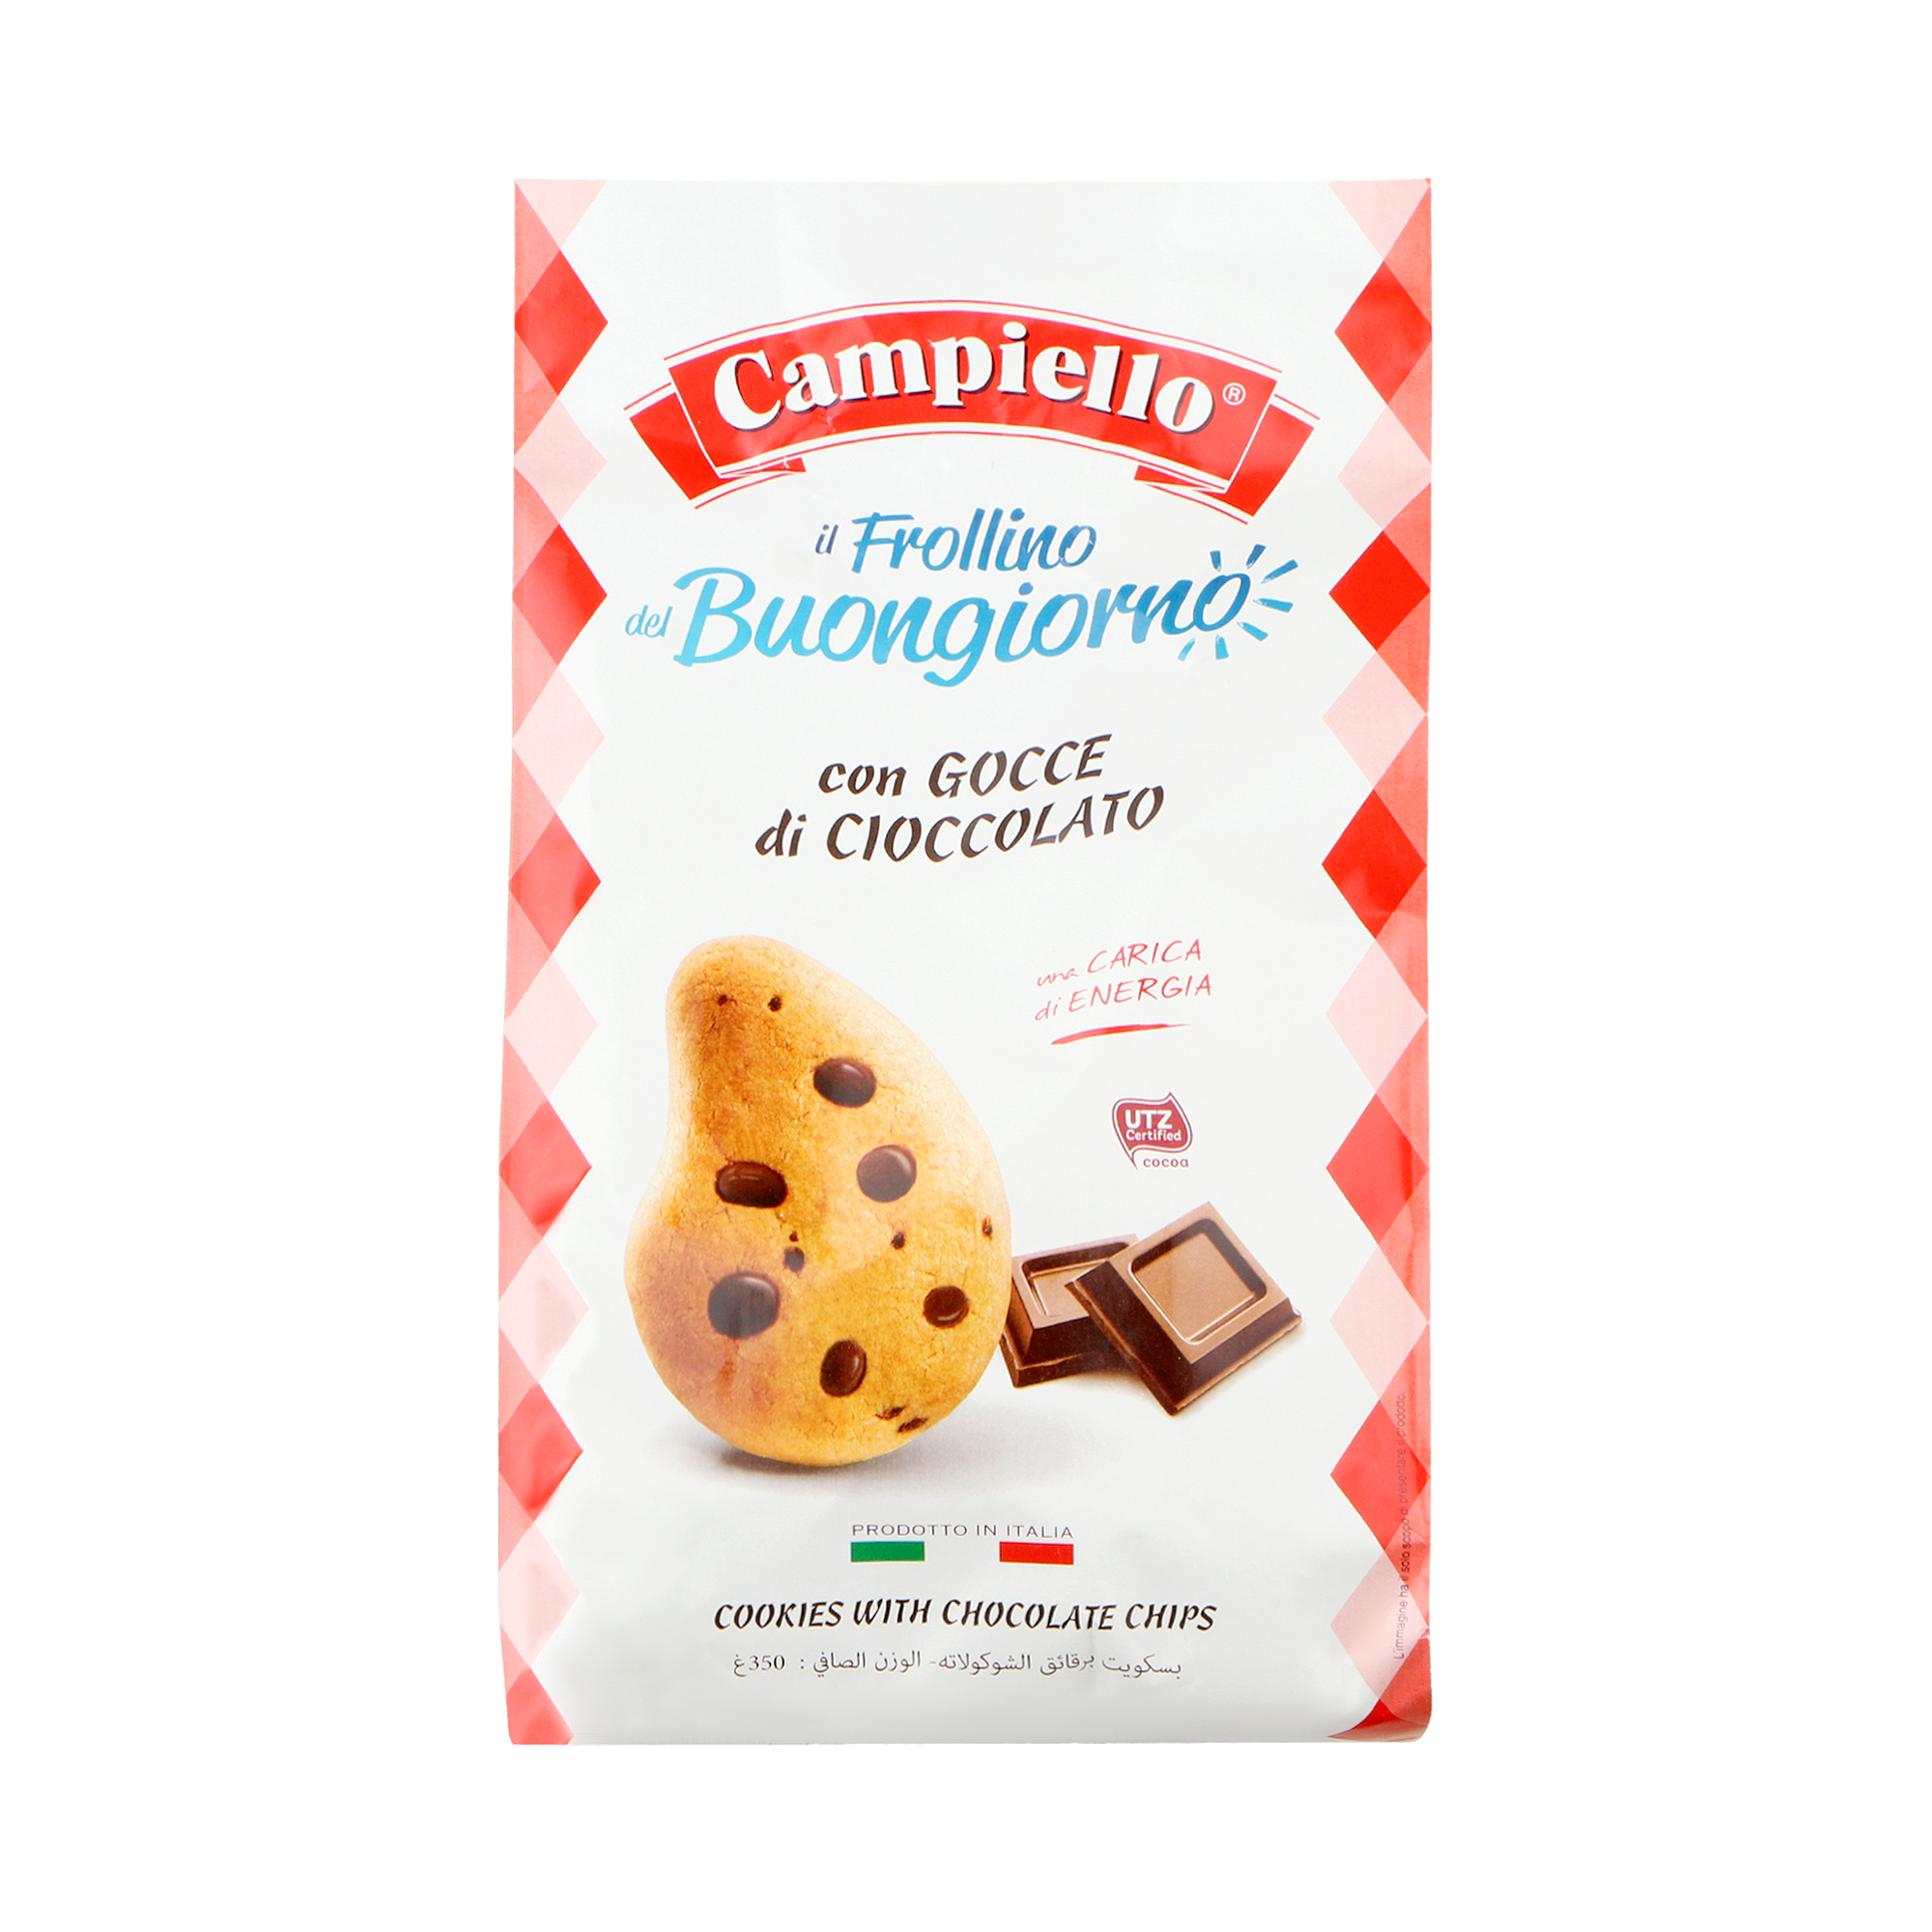 Печенье Campiello il Frollino del Buongiorno с шоколадом 350 г печенье campiello il frollino del buongiorno con panna 350 г